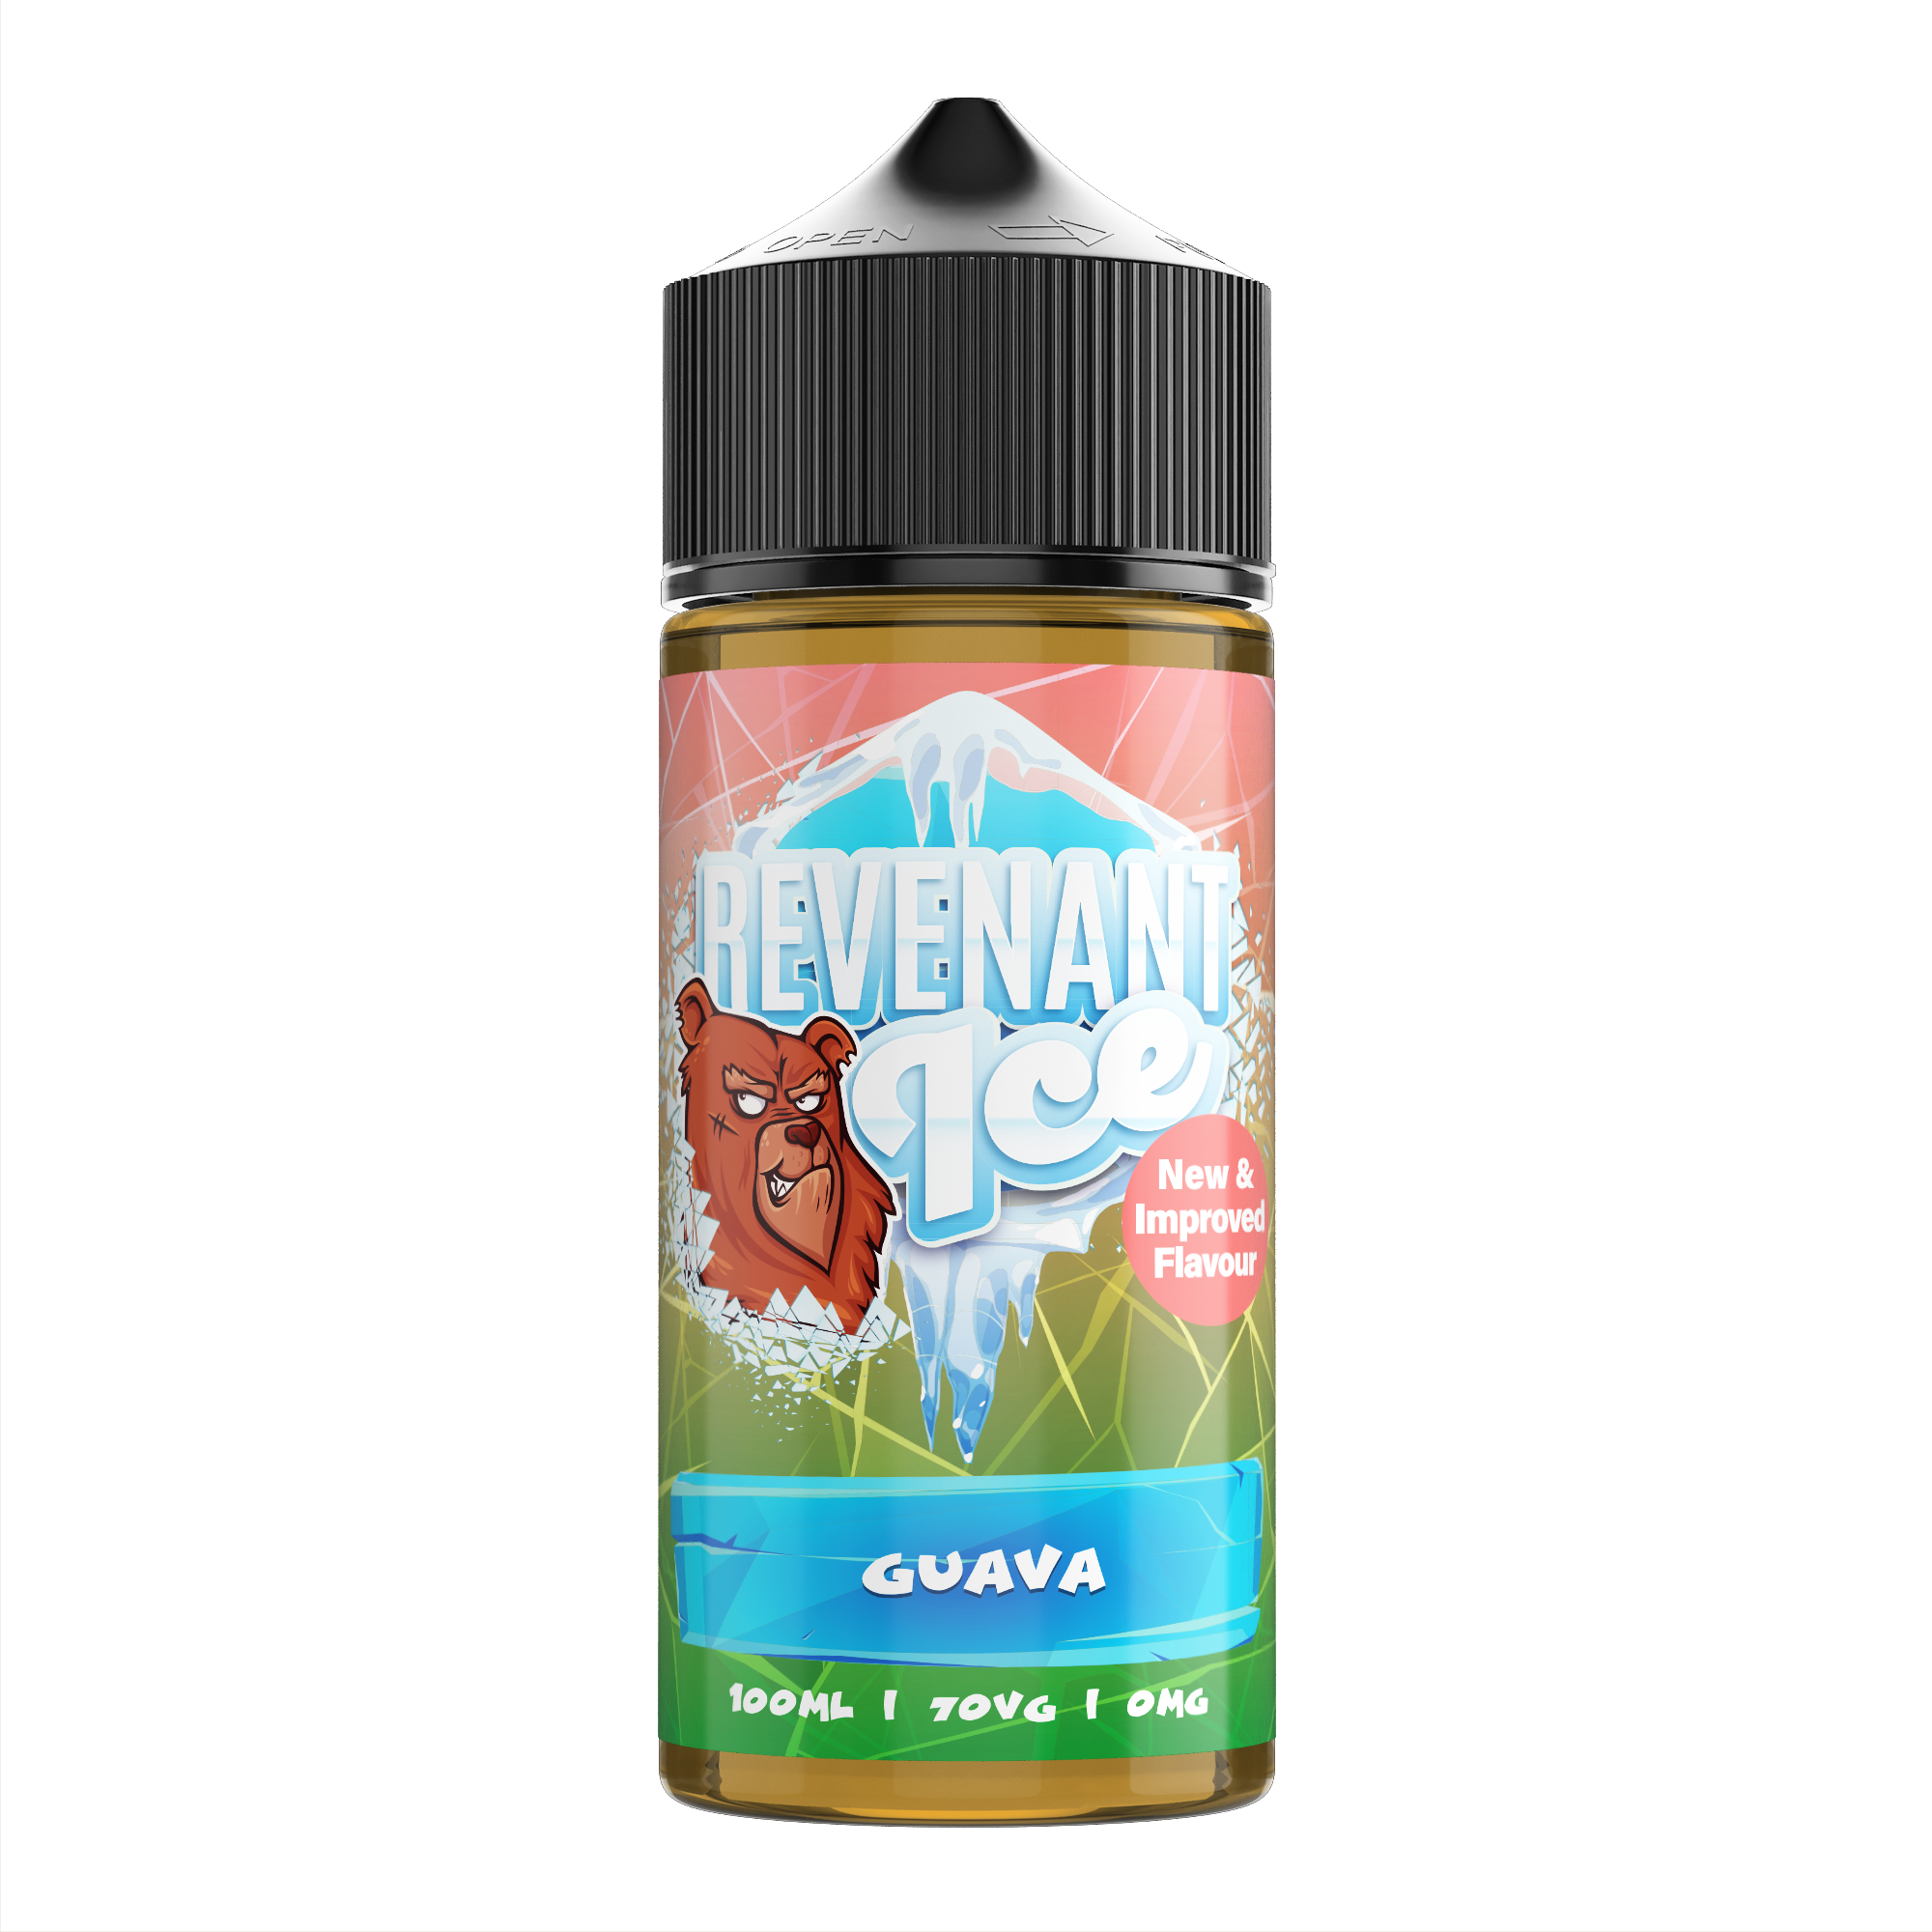 Guava Ice 100ml Shortfill by Revenant Ice